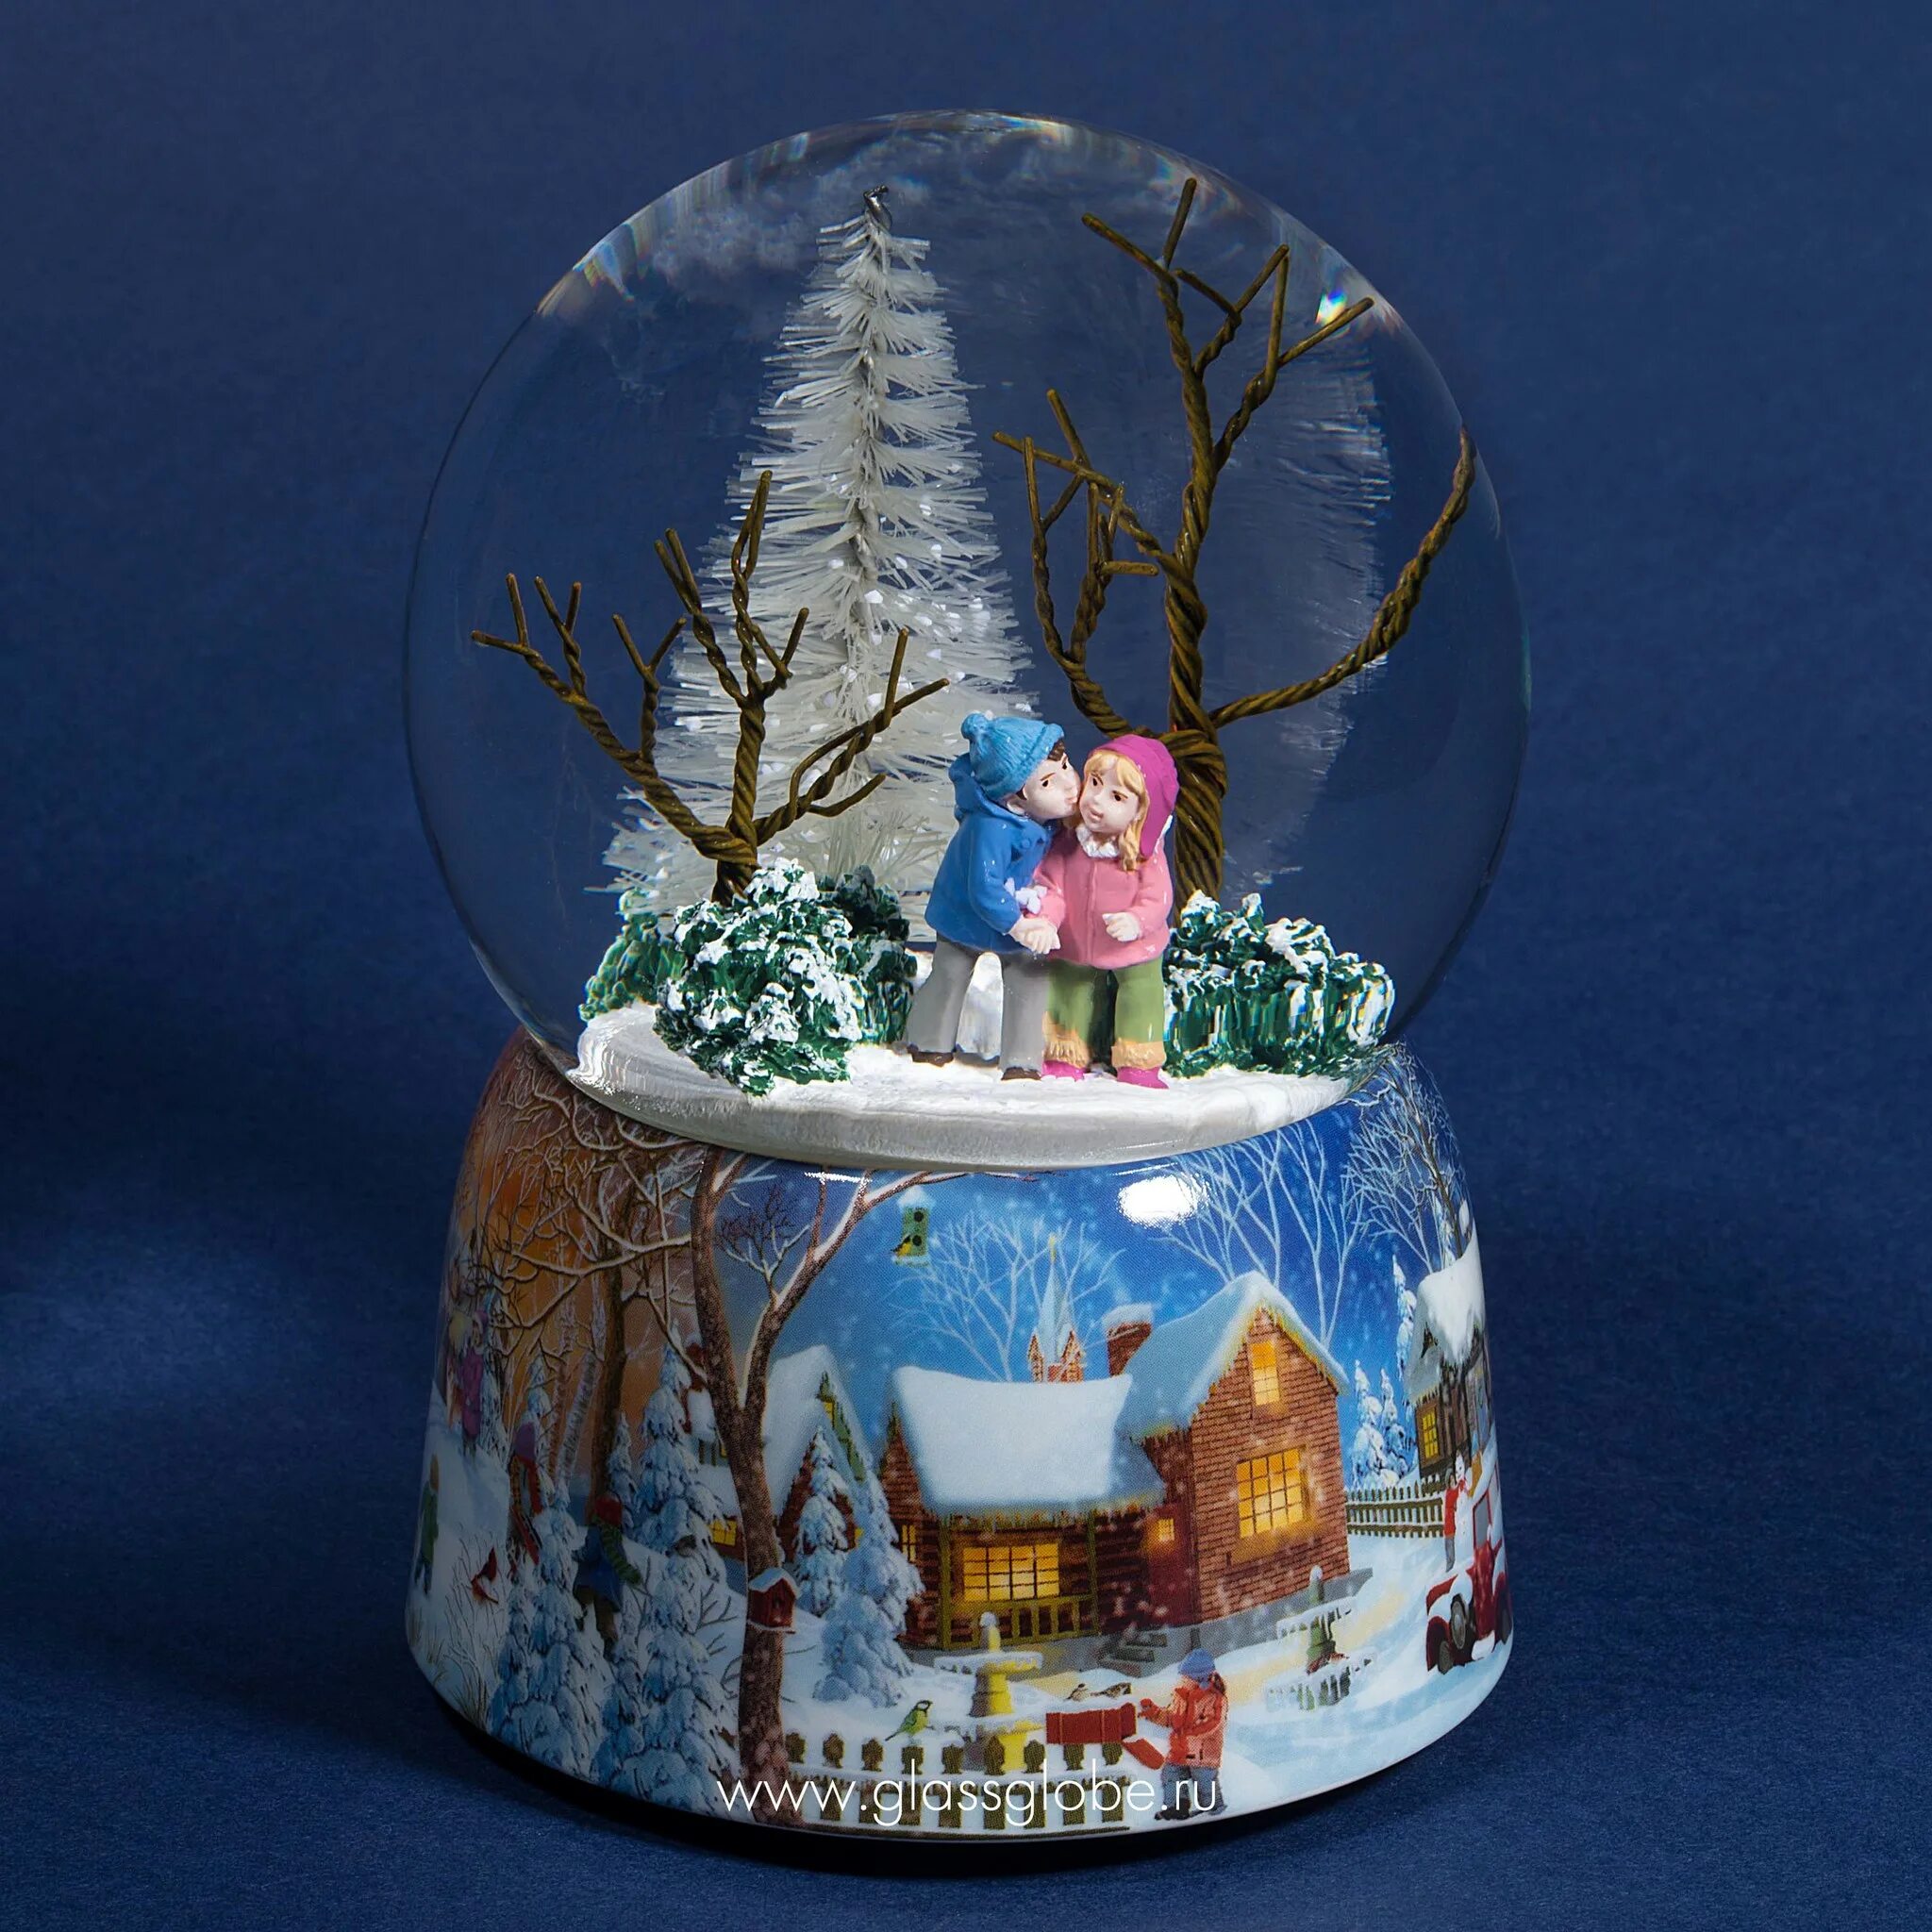 Стеклянный шар снег. Lefard снежный шар. Магазин снежных шаров Glassglobe. Снежный шар Леруа Мерлен. Стеклянный шар со снегом.